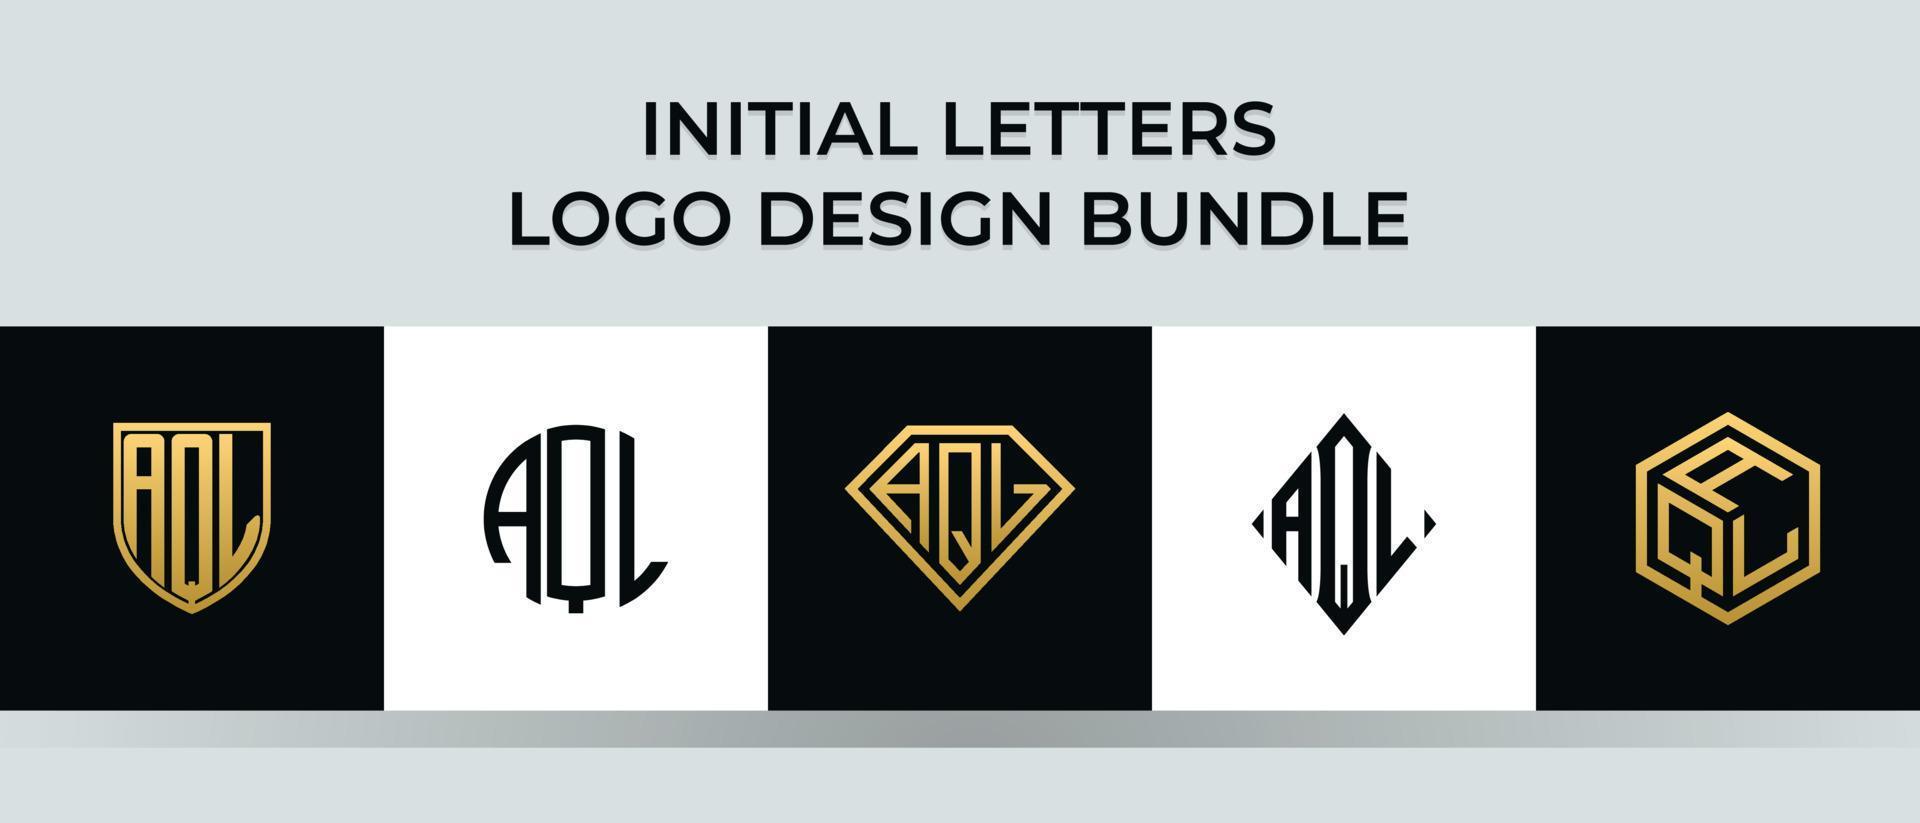 Anfangsbuchstaben aql Logo Designs Bundle vektor